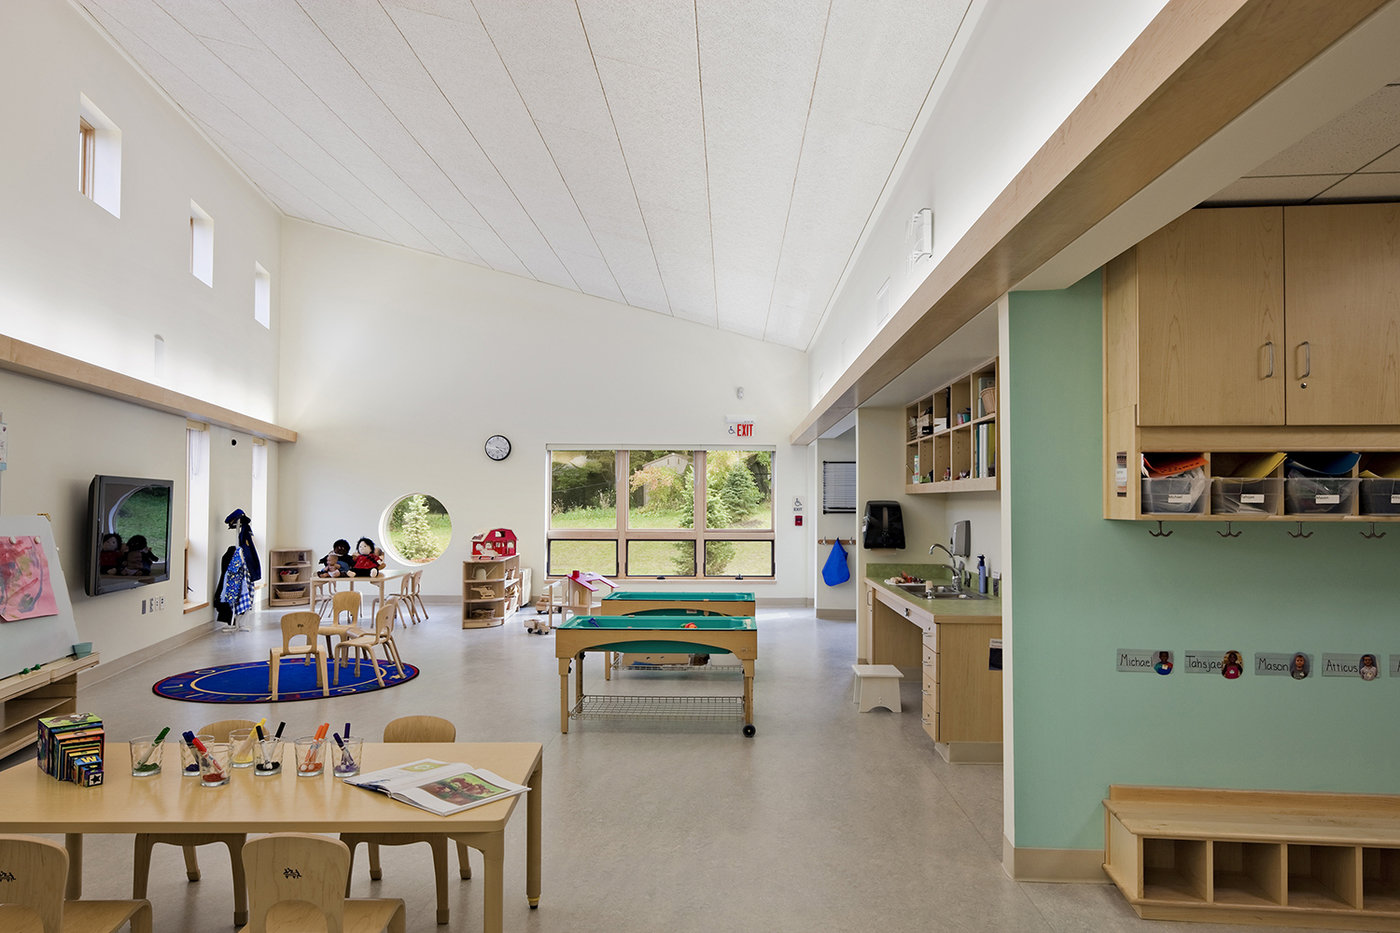 8 tskp bloomfield wintonbury early childhood magnet school interior classroom furniture finishings windows lighting 1400 0x0x1500x1000 q85